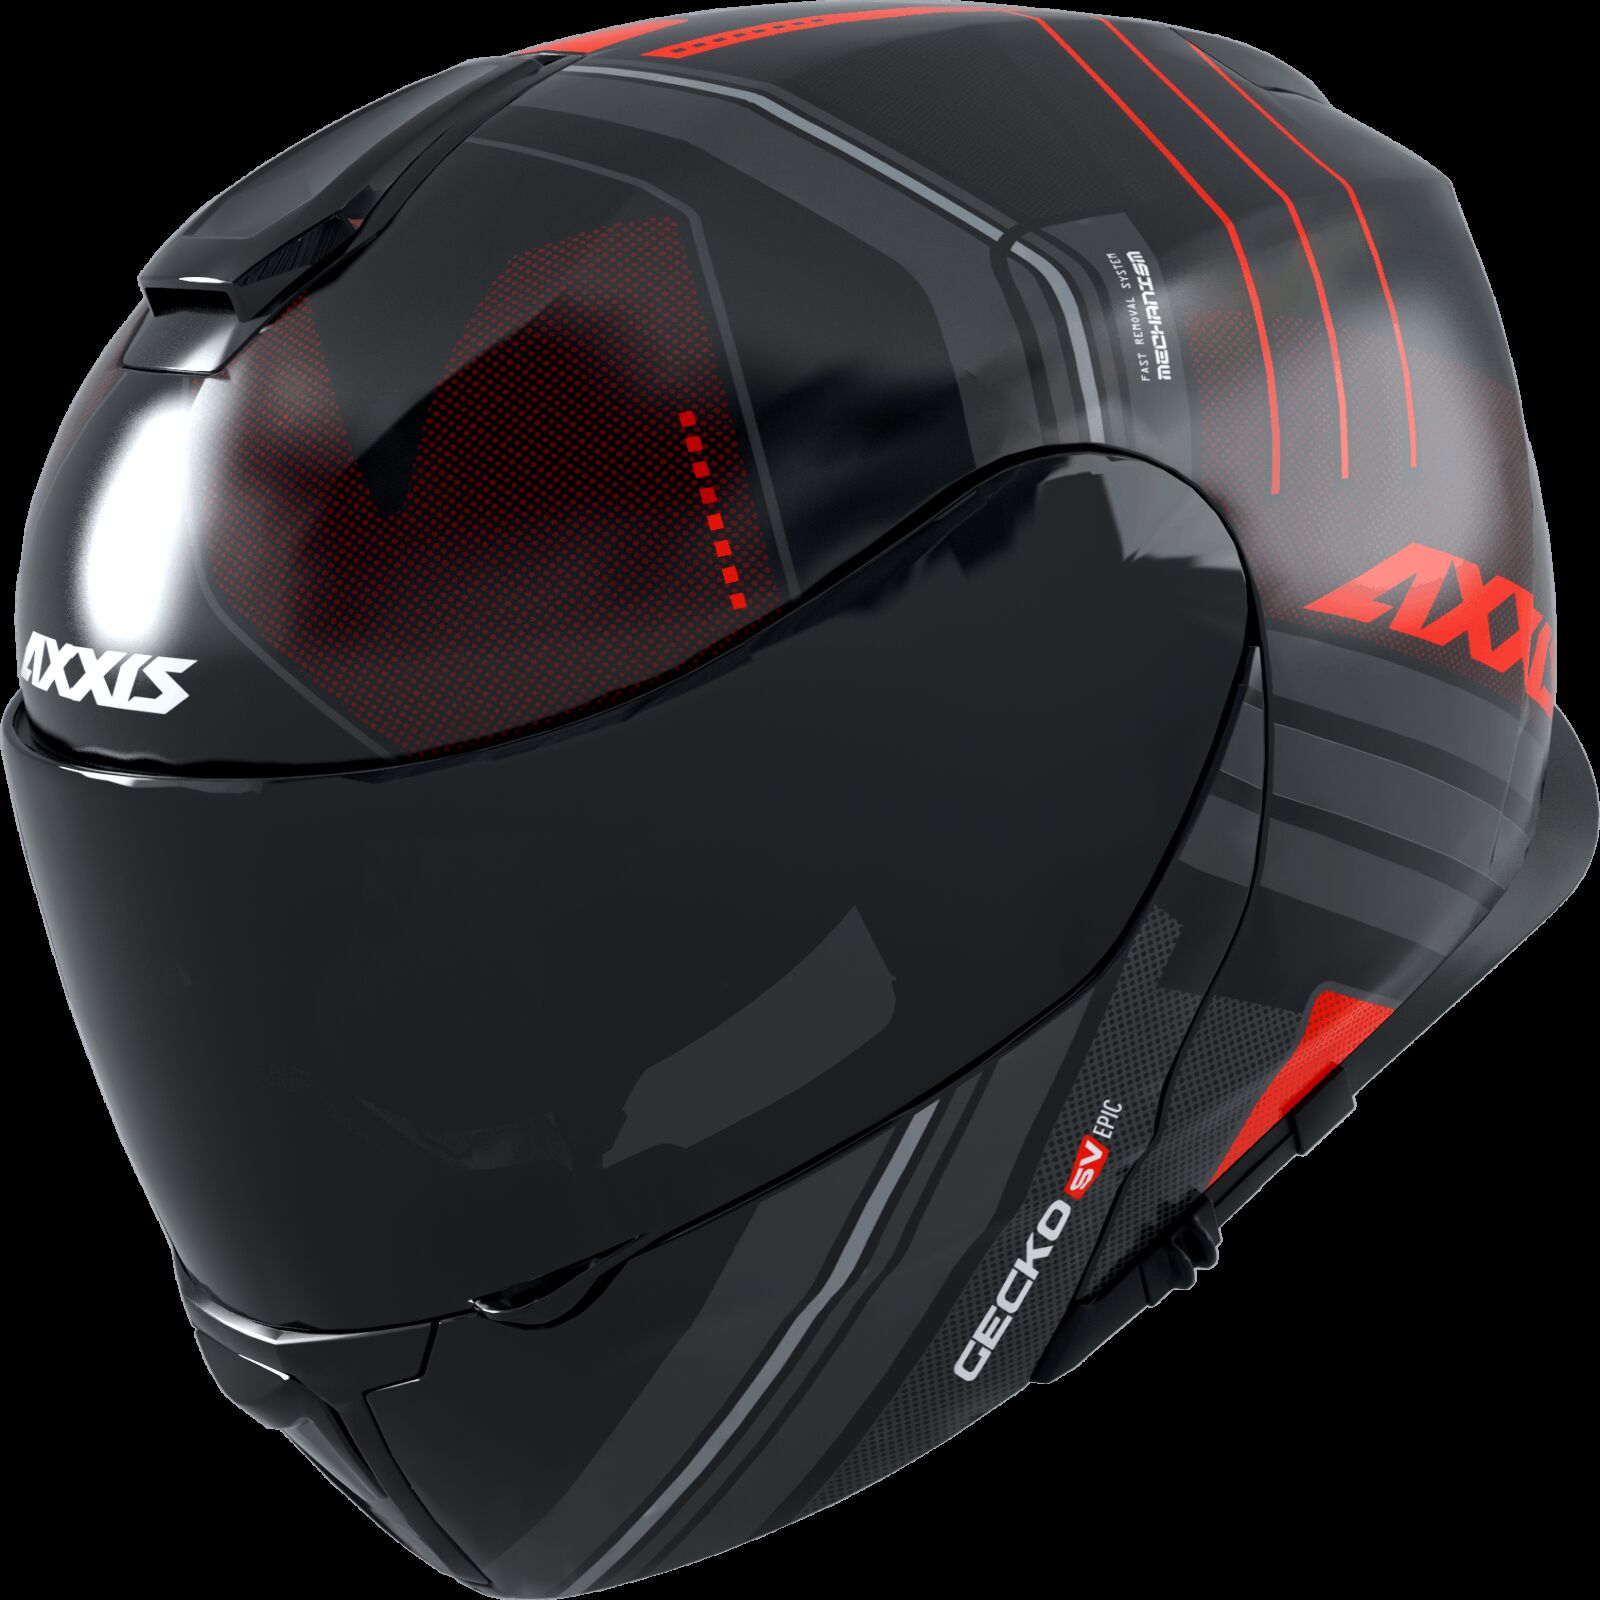 Obrázek produktu Výklopná helma AXXIS GECKO SV ABS epic b5 matná fluor červená L 42627311536